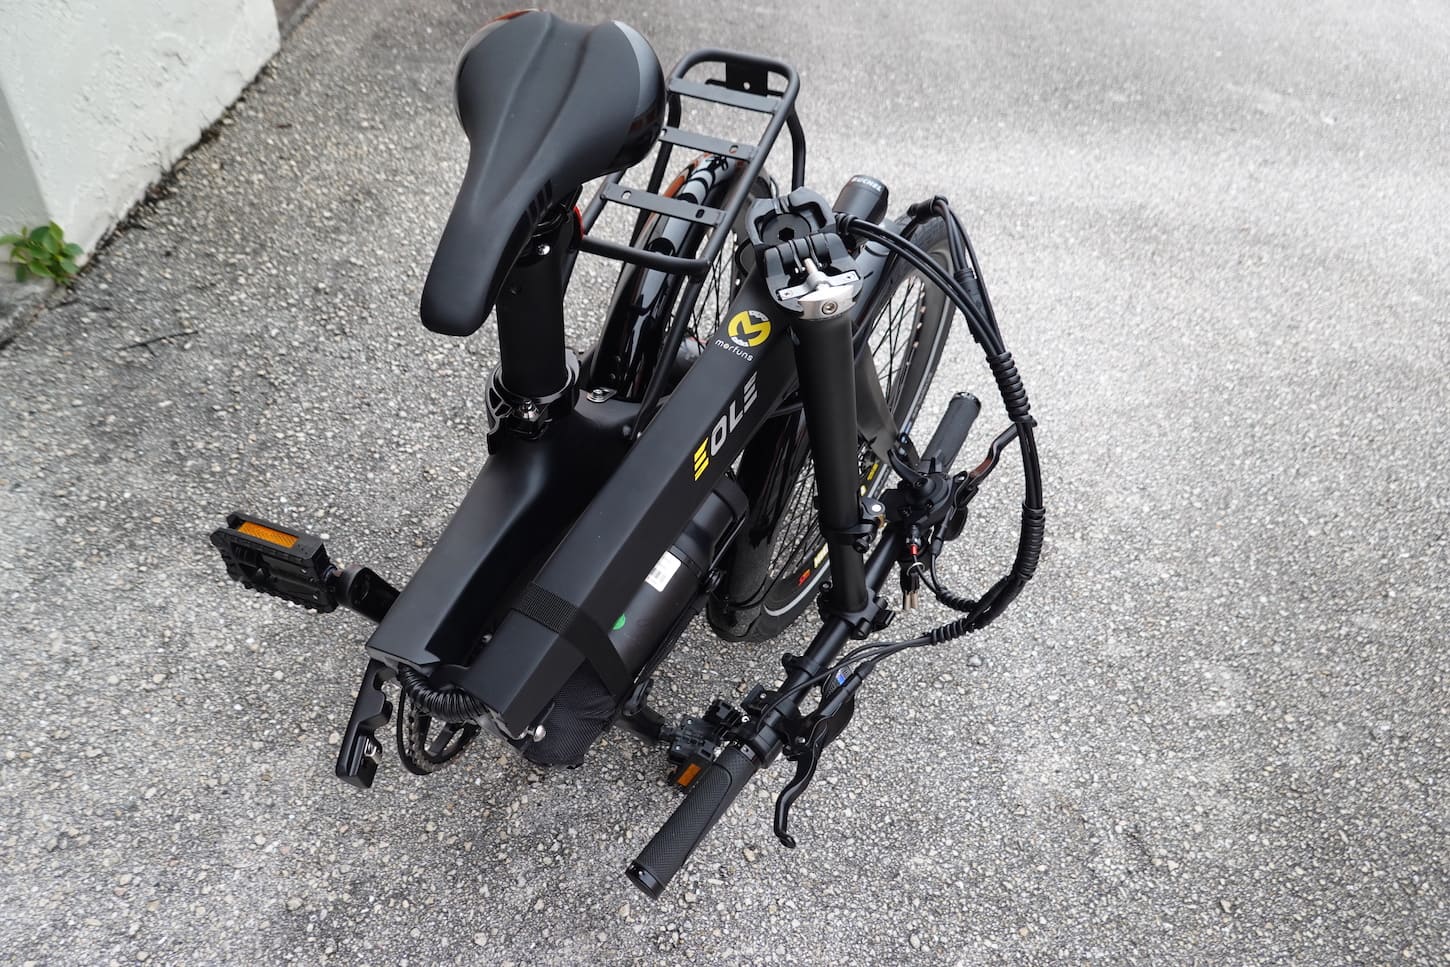 Morfuns Eole S carbon fiber folding e-bike review: Throttle